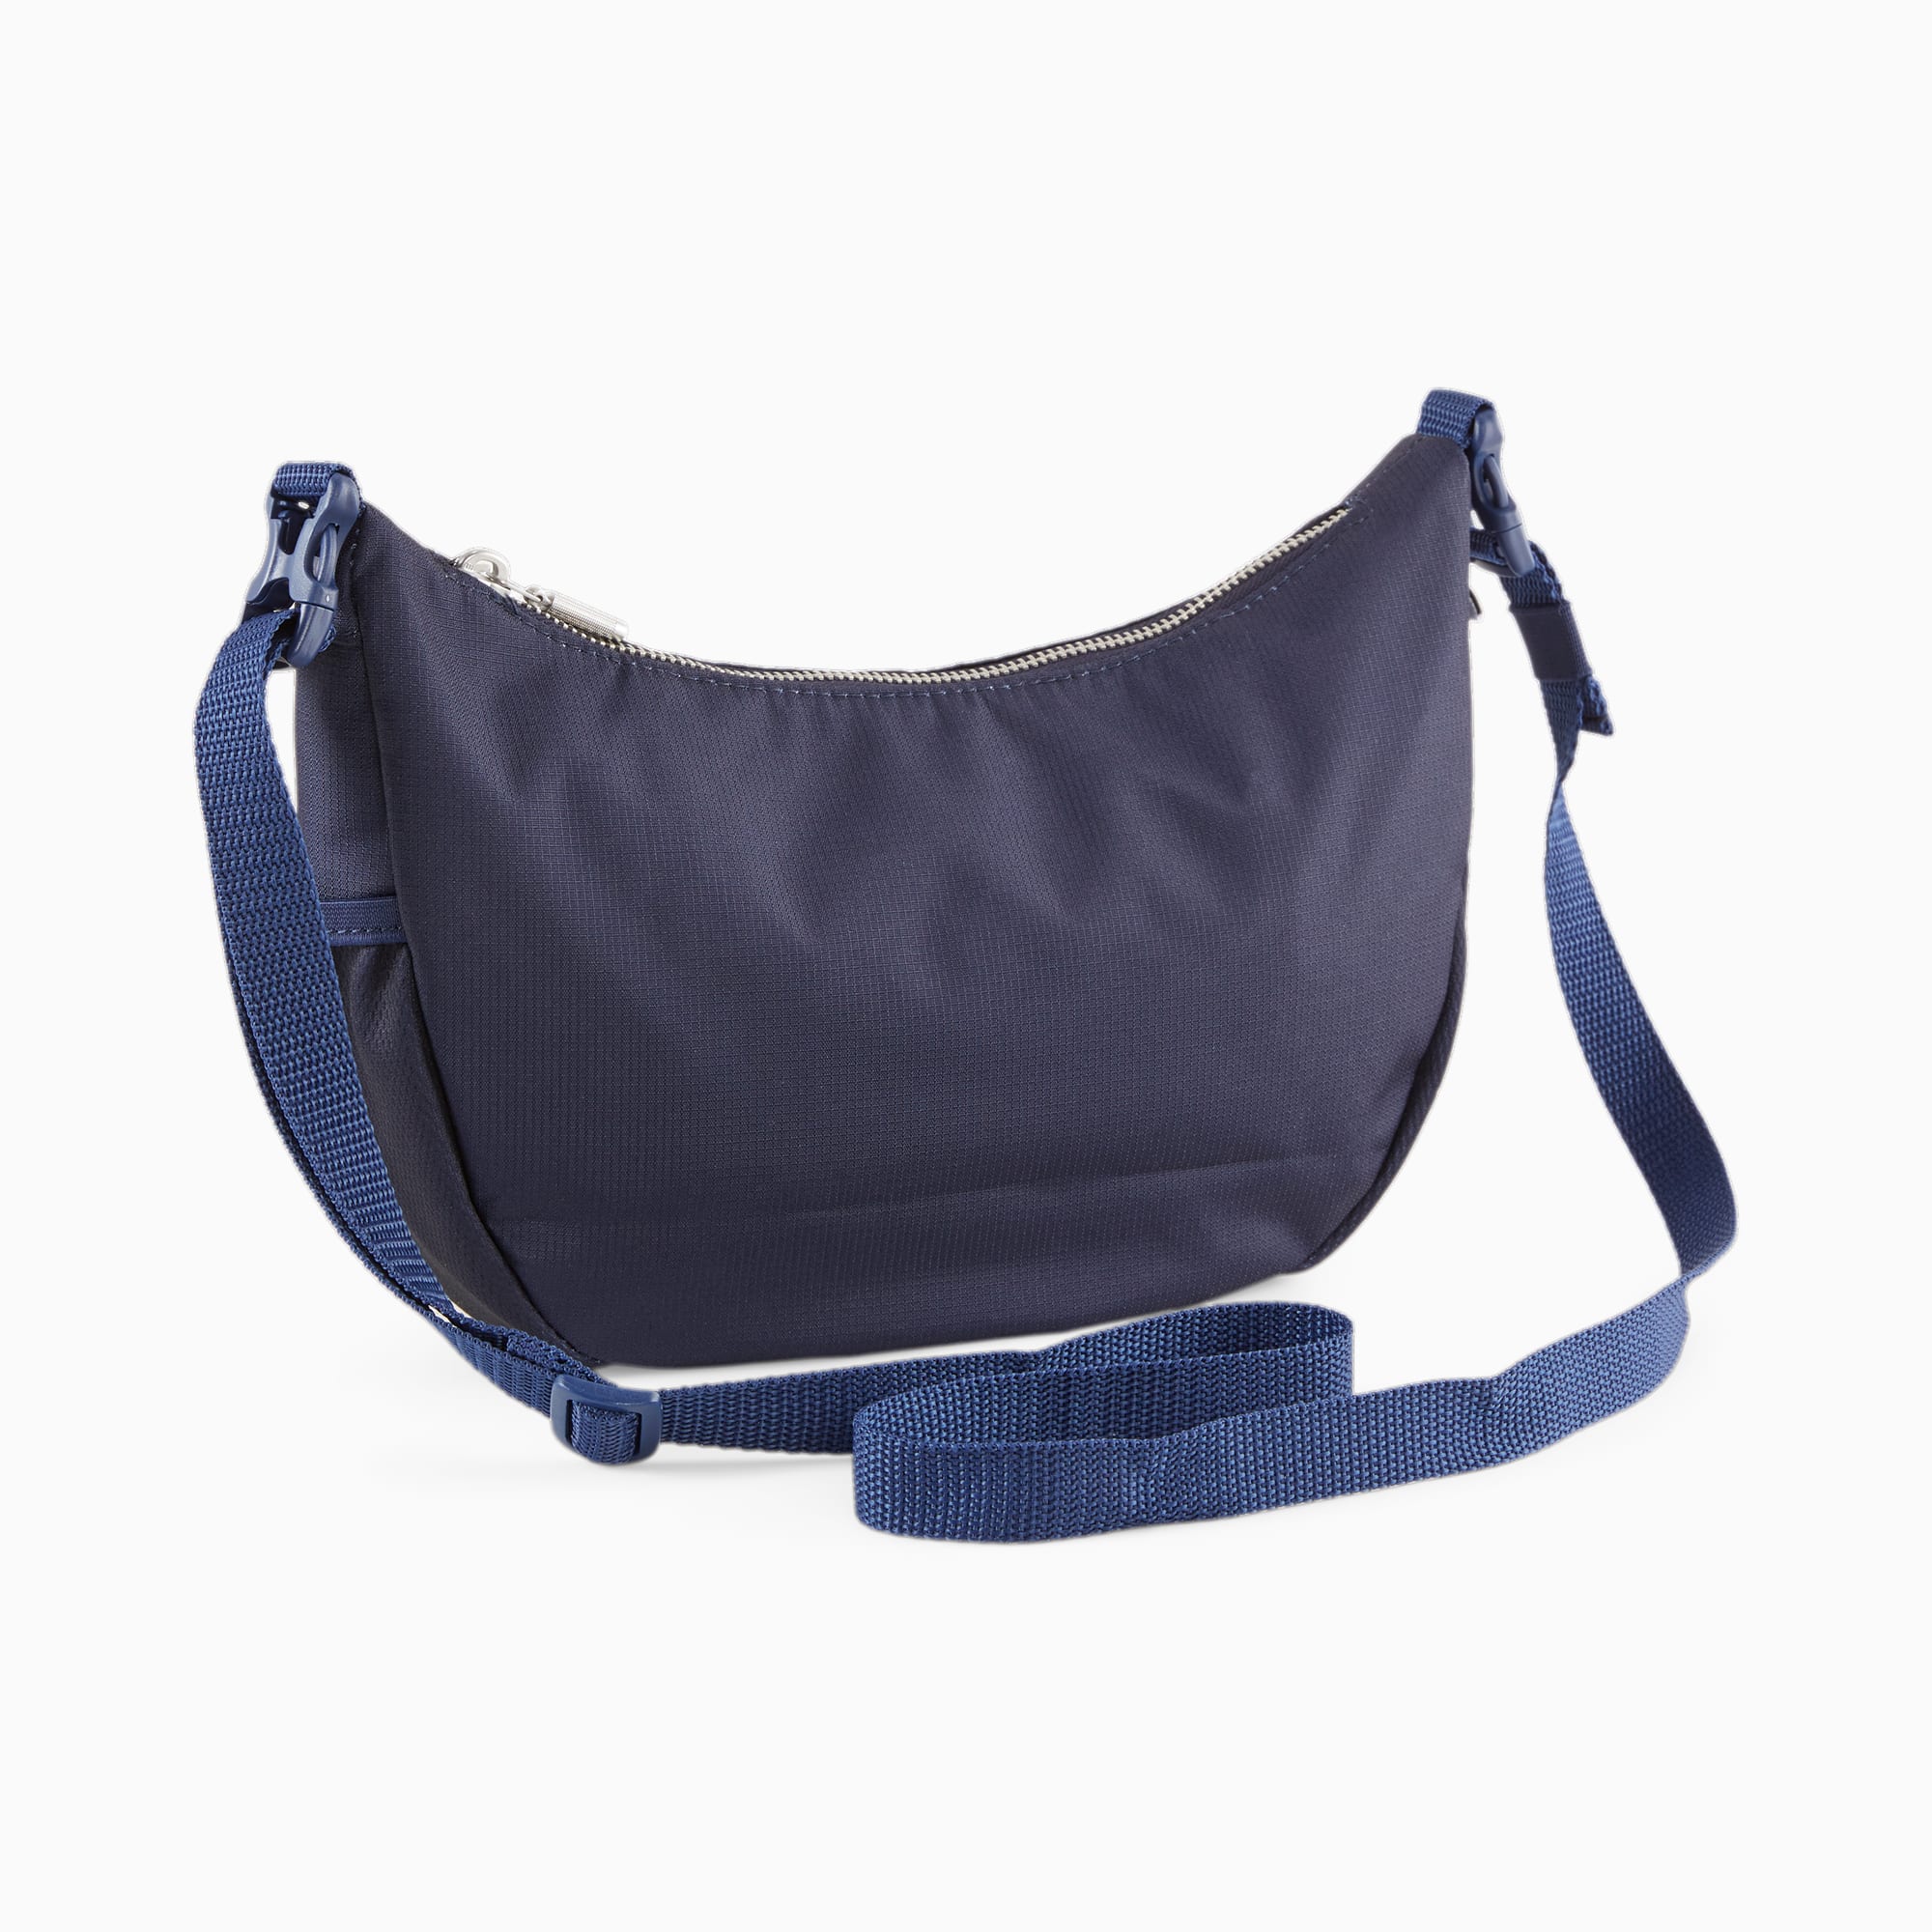 Women's PUMA Mmq Concept Hobo Bag, Dark Blue, Accessories